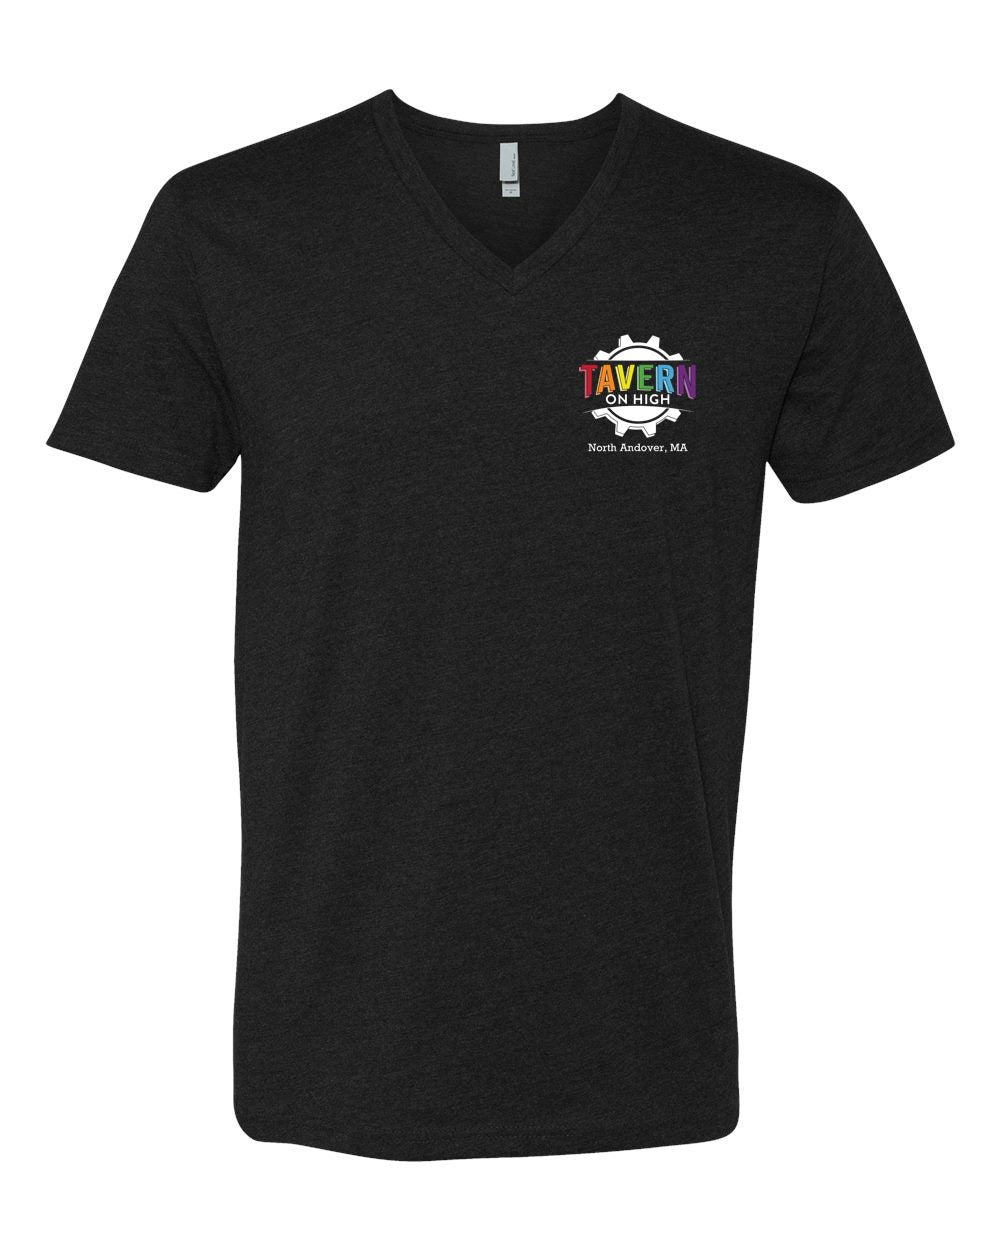 Tavern on High Pride On High Unisex V-Neck T-Shirt